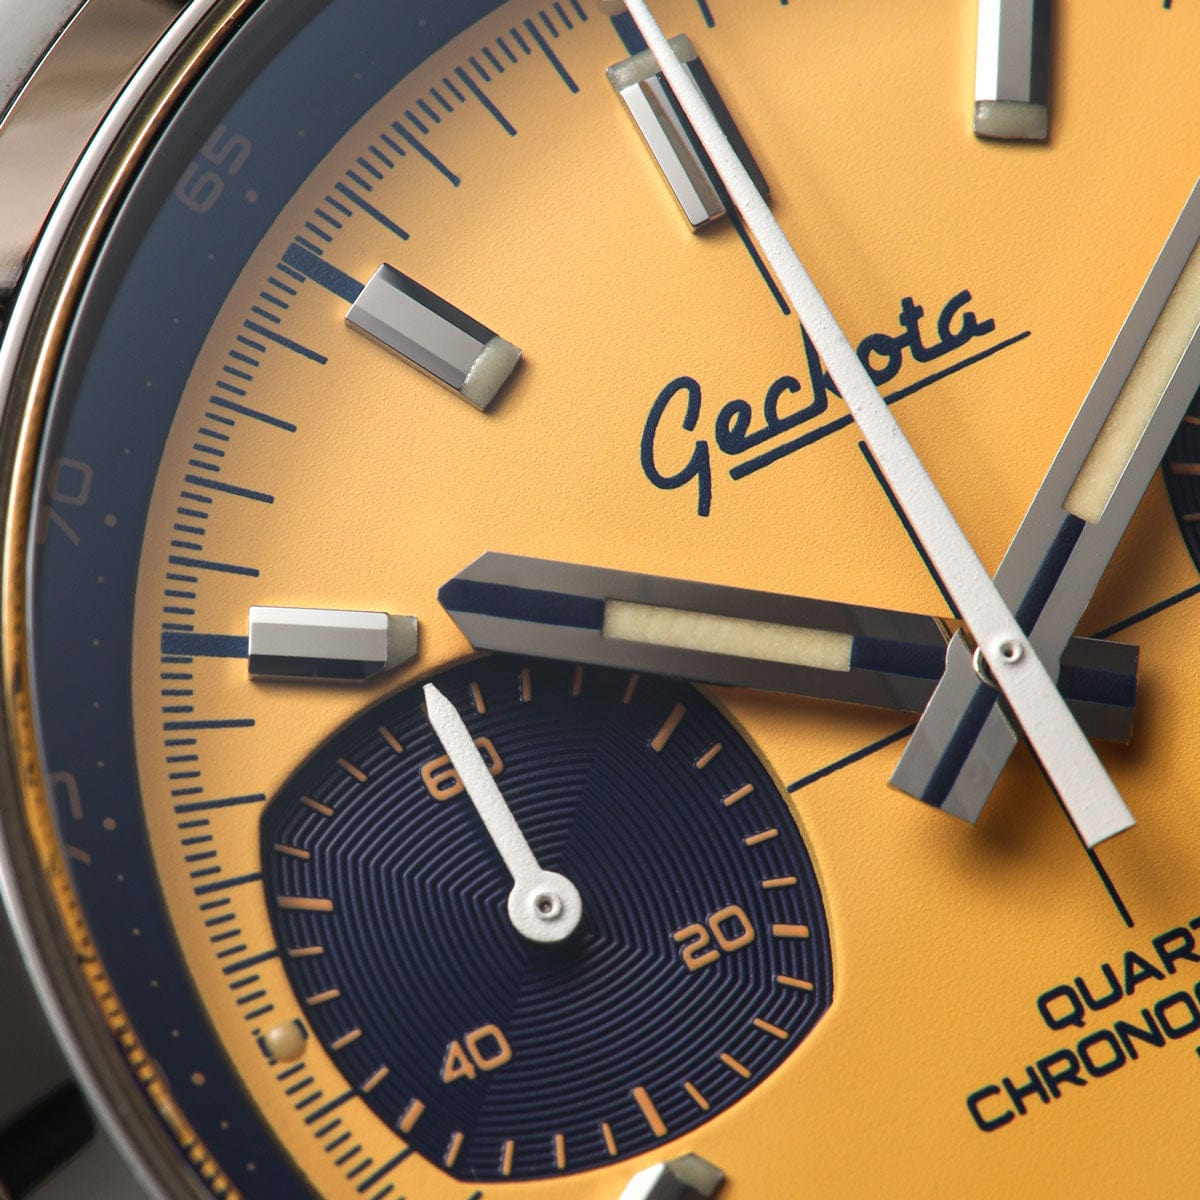 Geckota Chronotimer Racing Chronograph Watch Yellow Dial VS-369-4 - NEARLY NEW